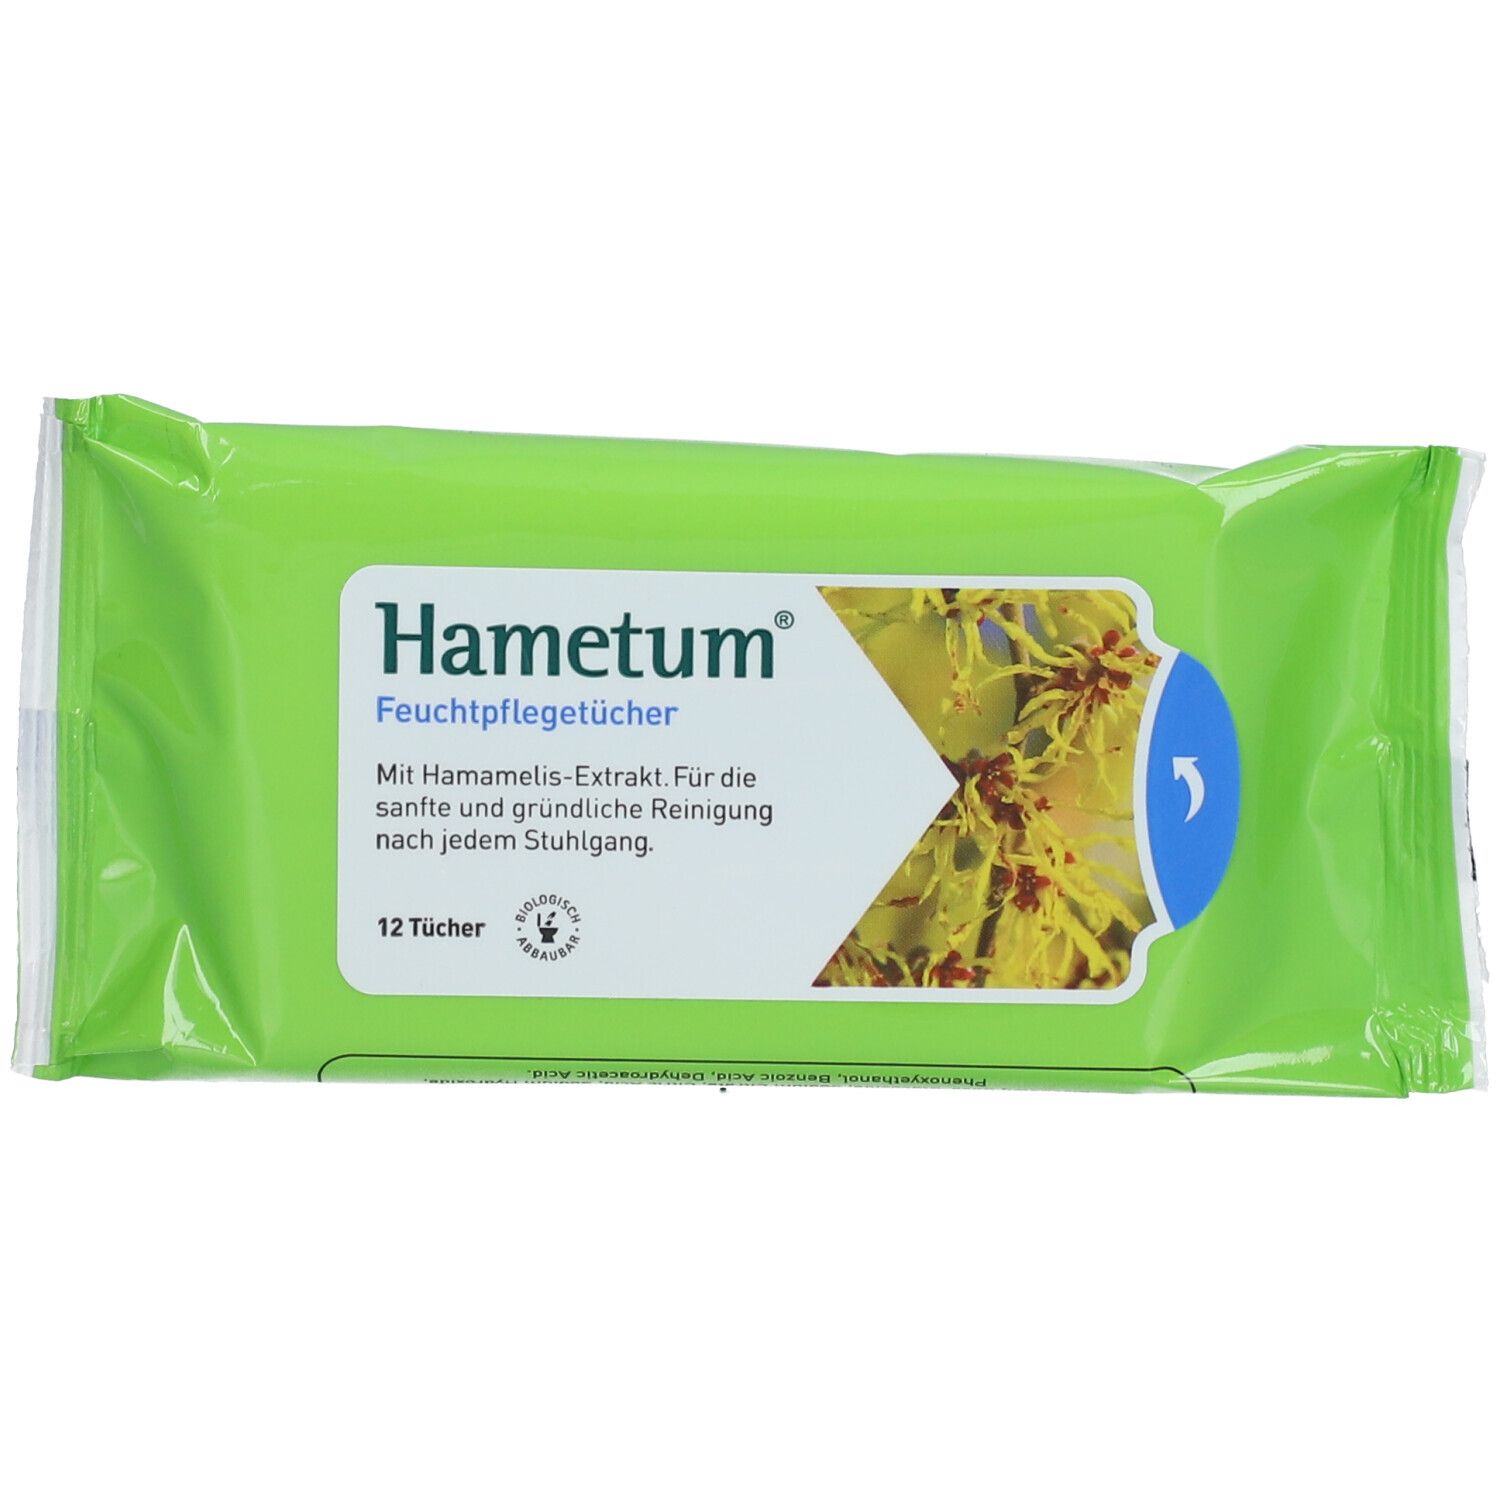 Image of Hametum®-Feuchtpflegetücher